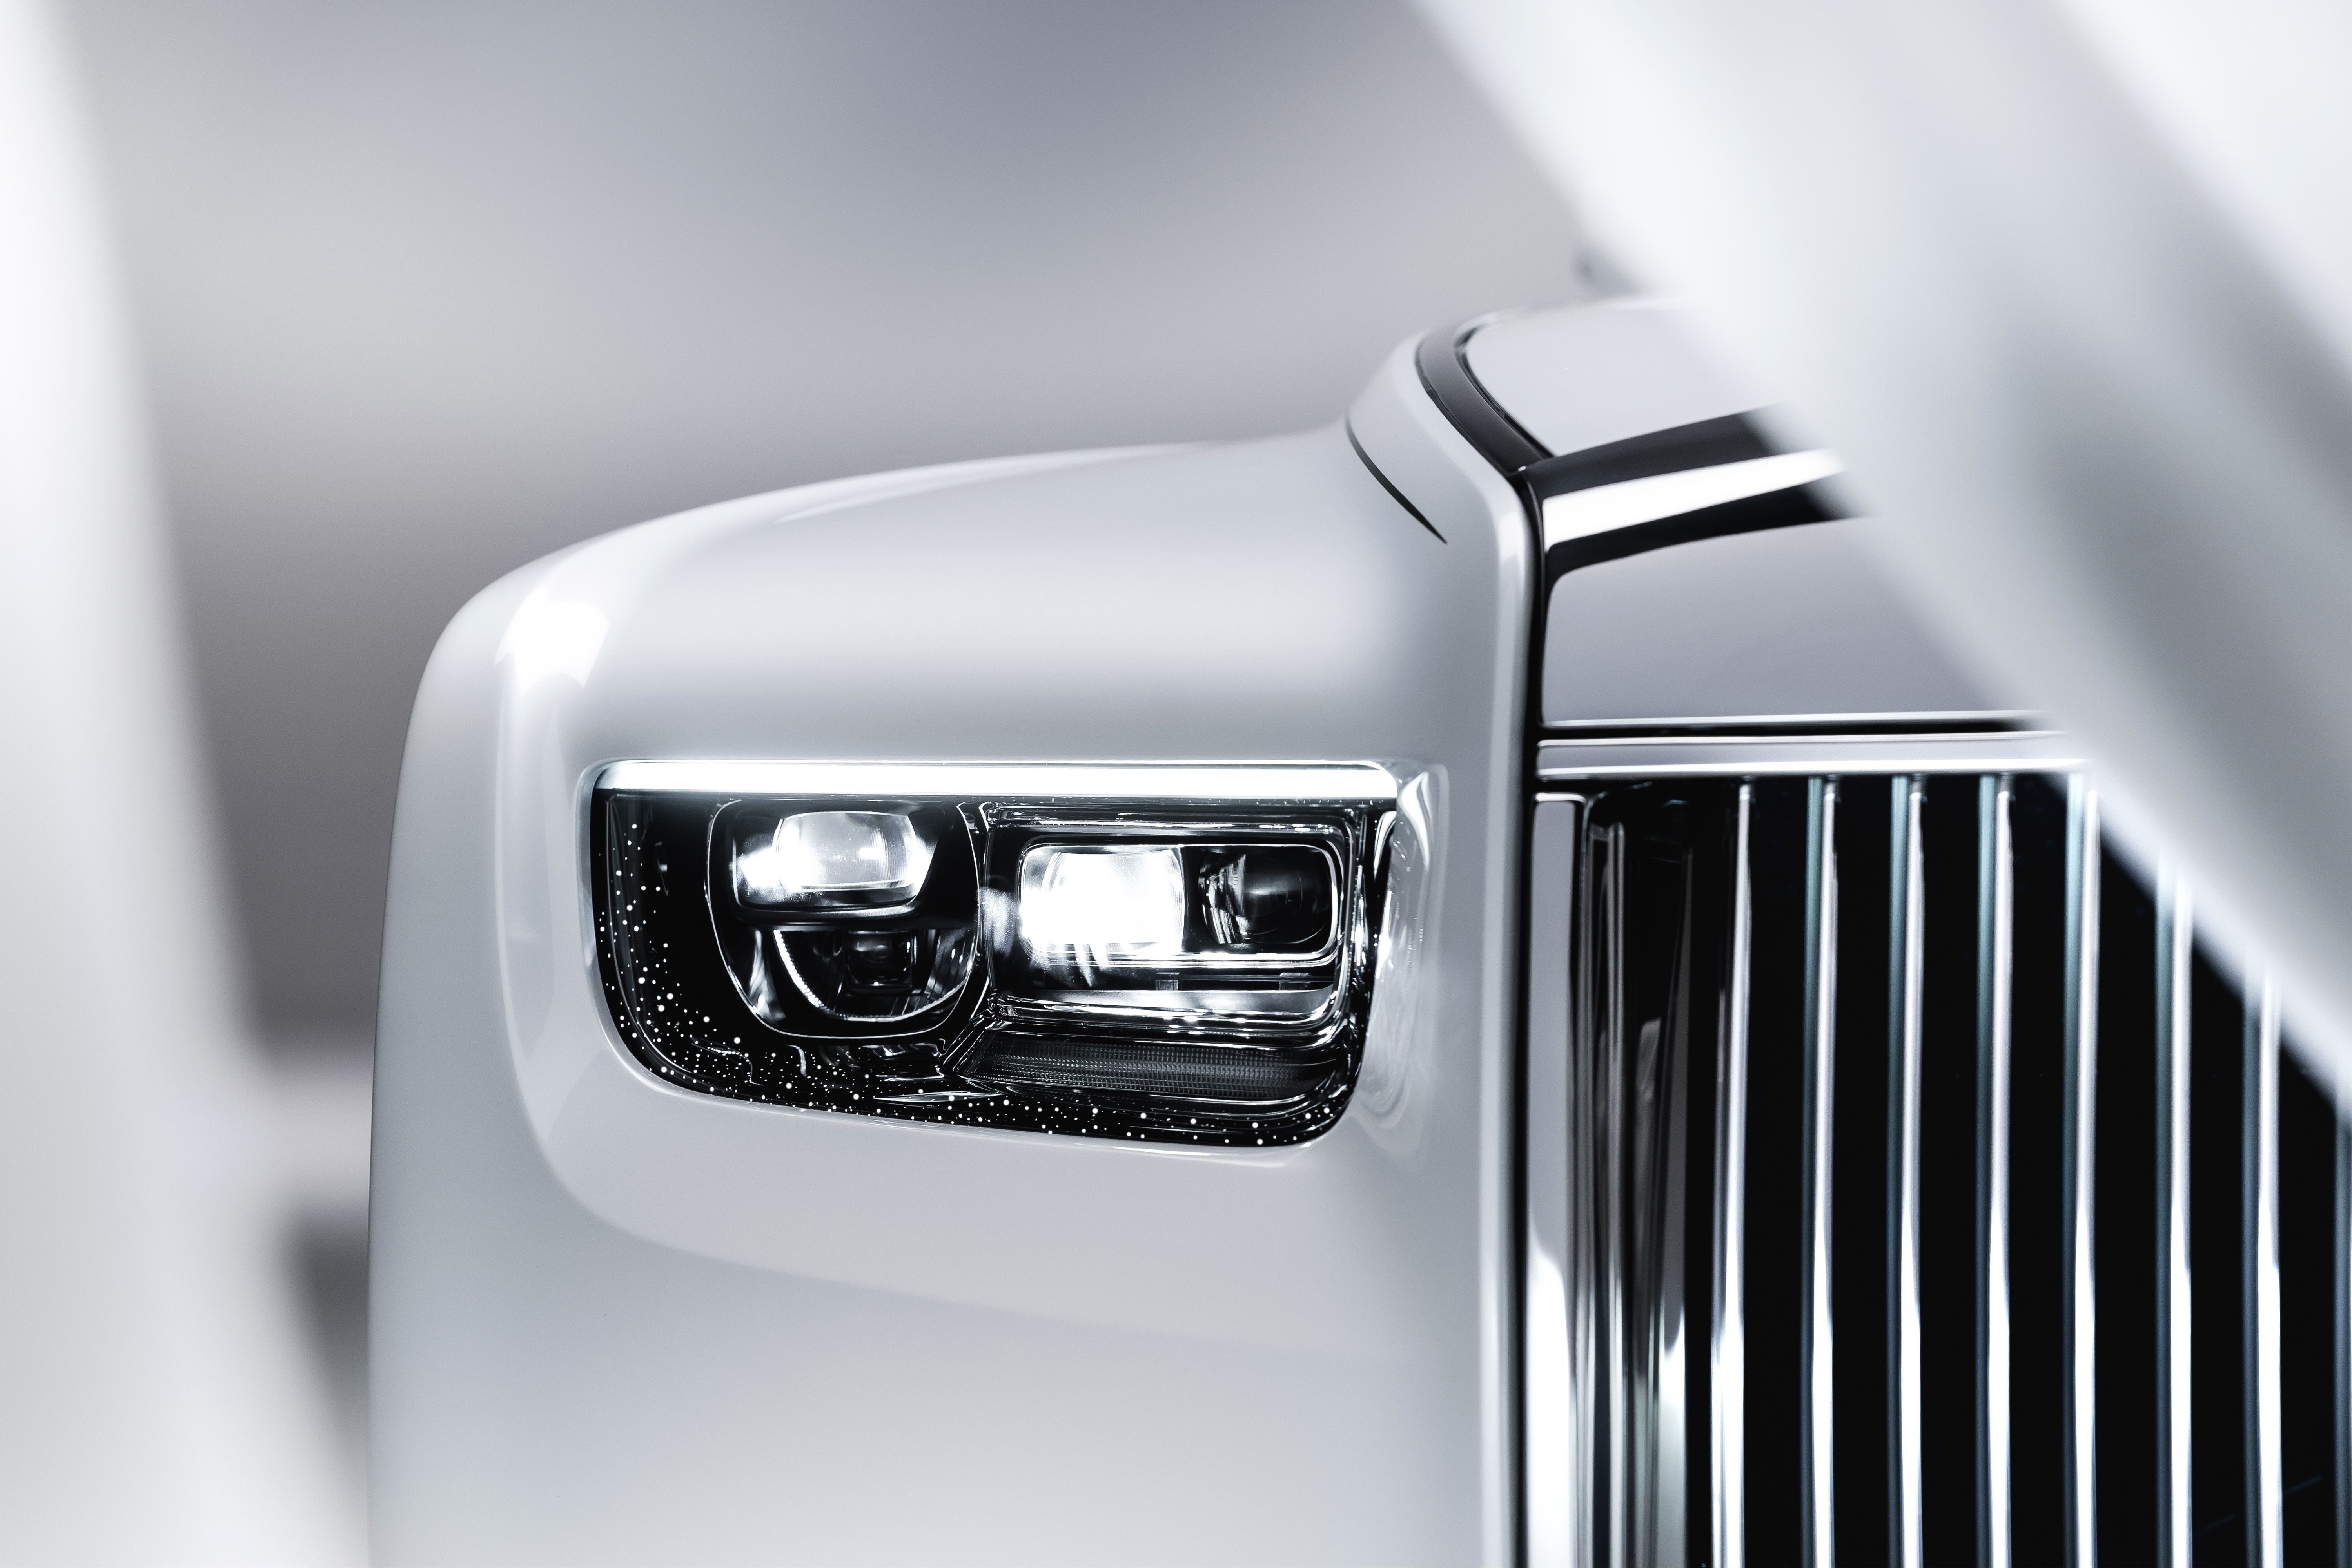 Check Out Rolls-Royce's Stunning New Phantom